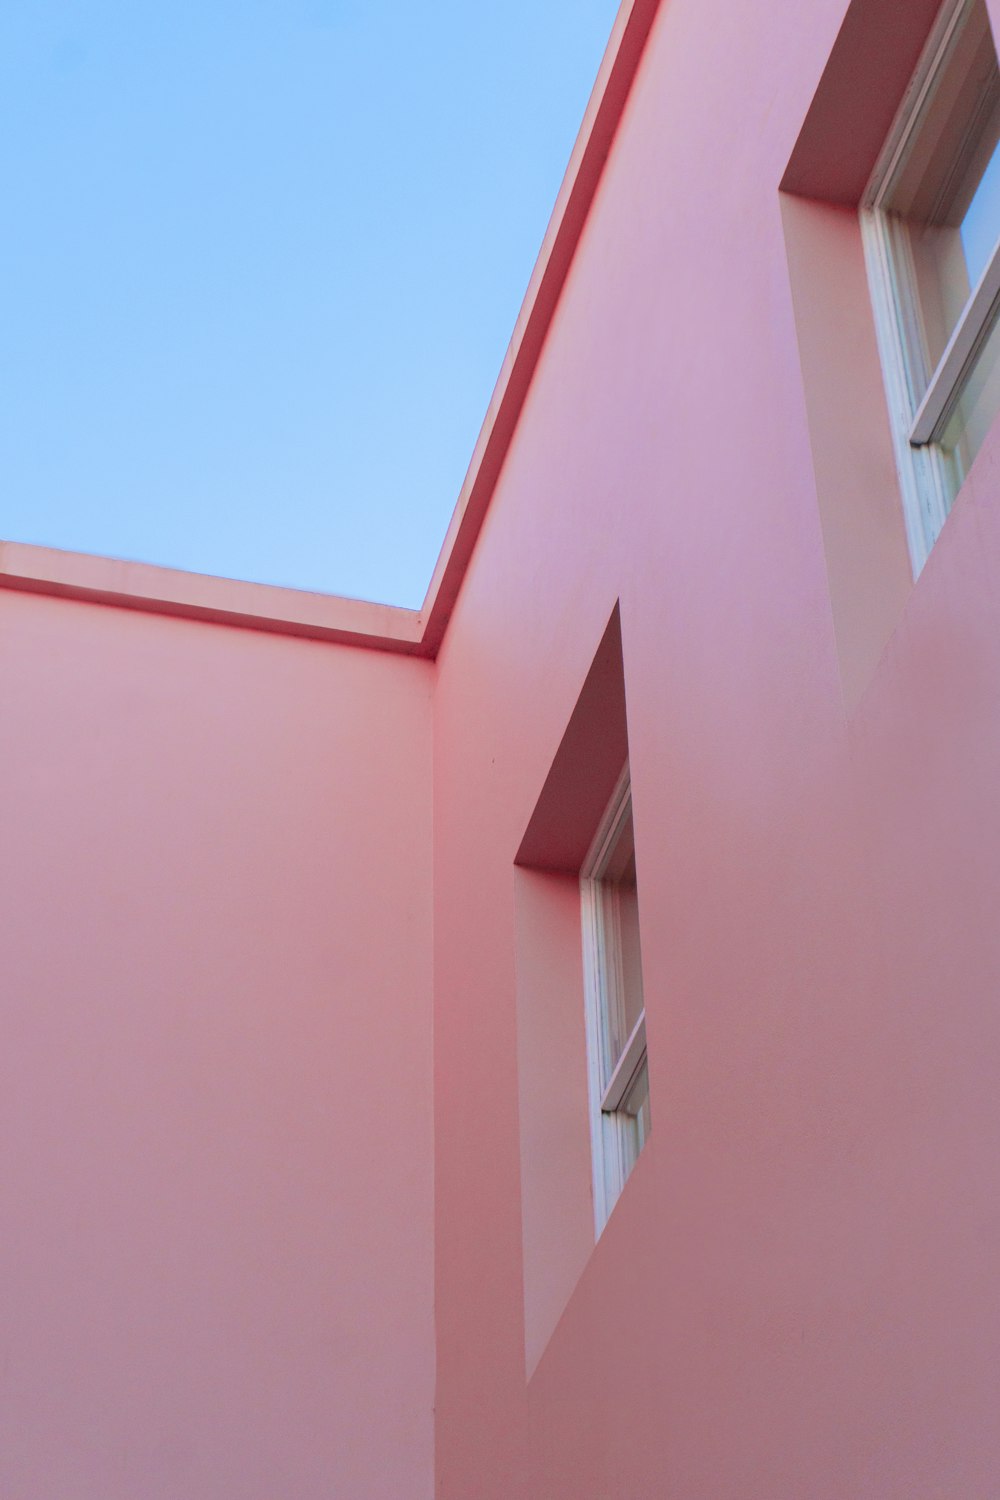 pink concrete building under blue sky during daytime